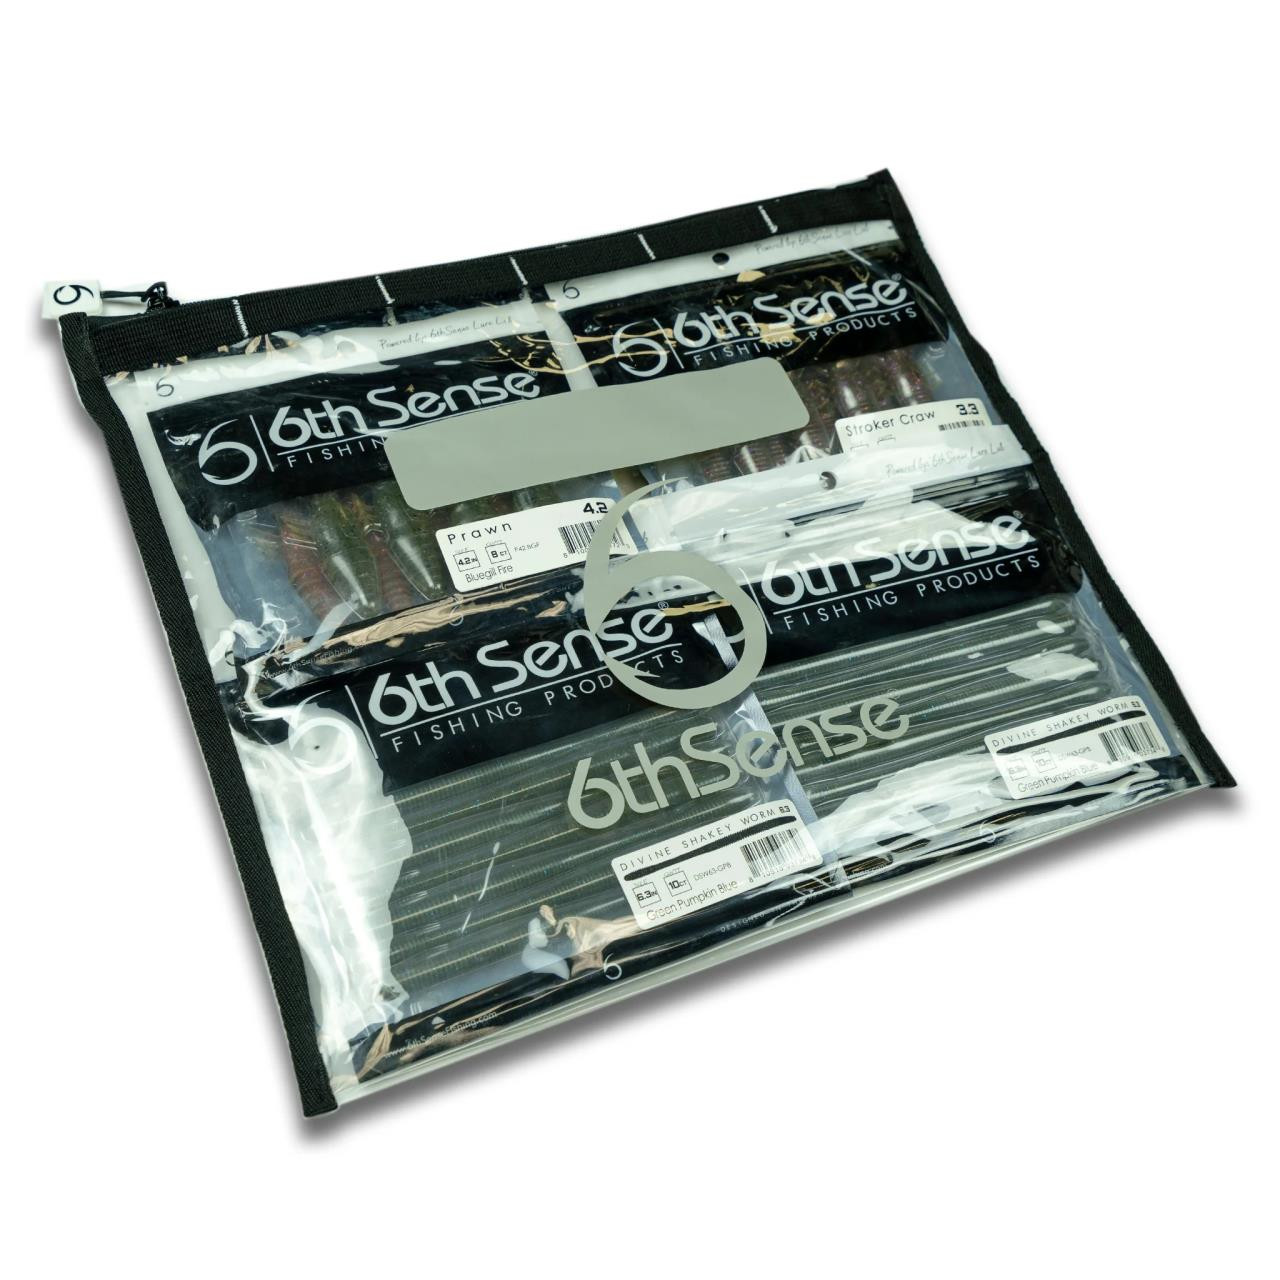 6th Sense BaitZip Pro Gusseted Tackle Storage Bag - Black - Presleys  Outdoors